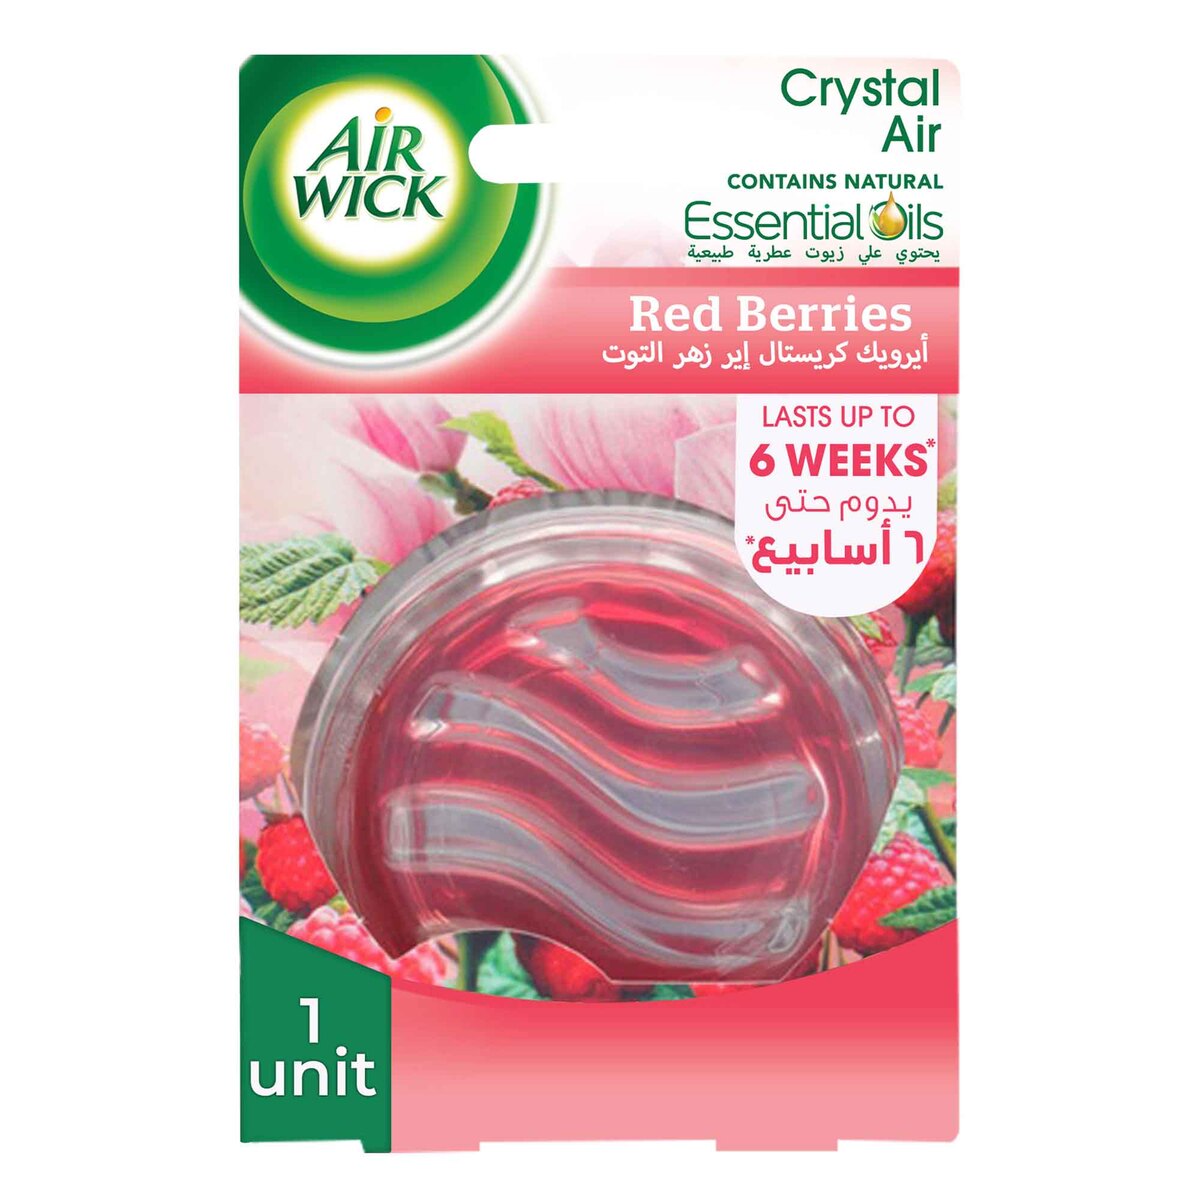 Air Wick Crystal Red Berries 1 pc